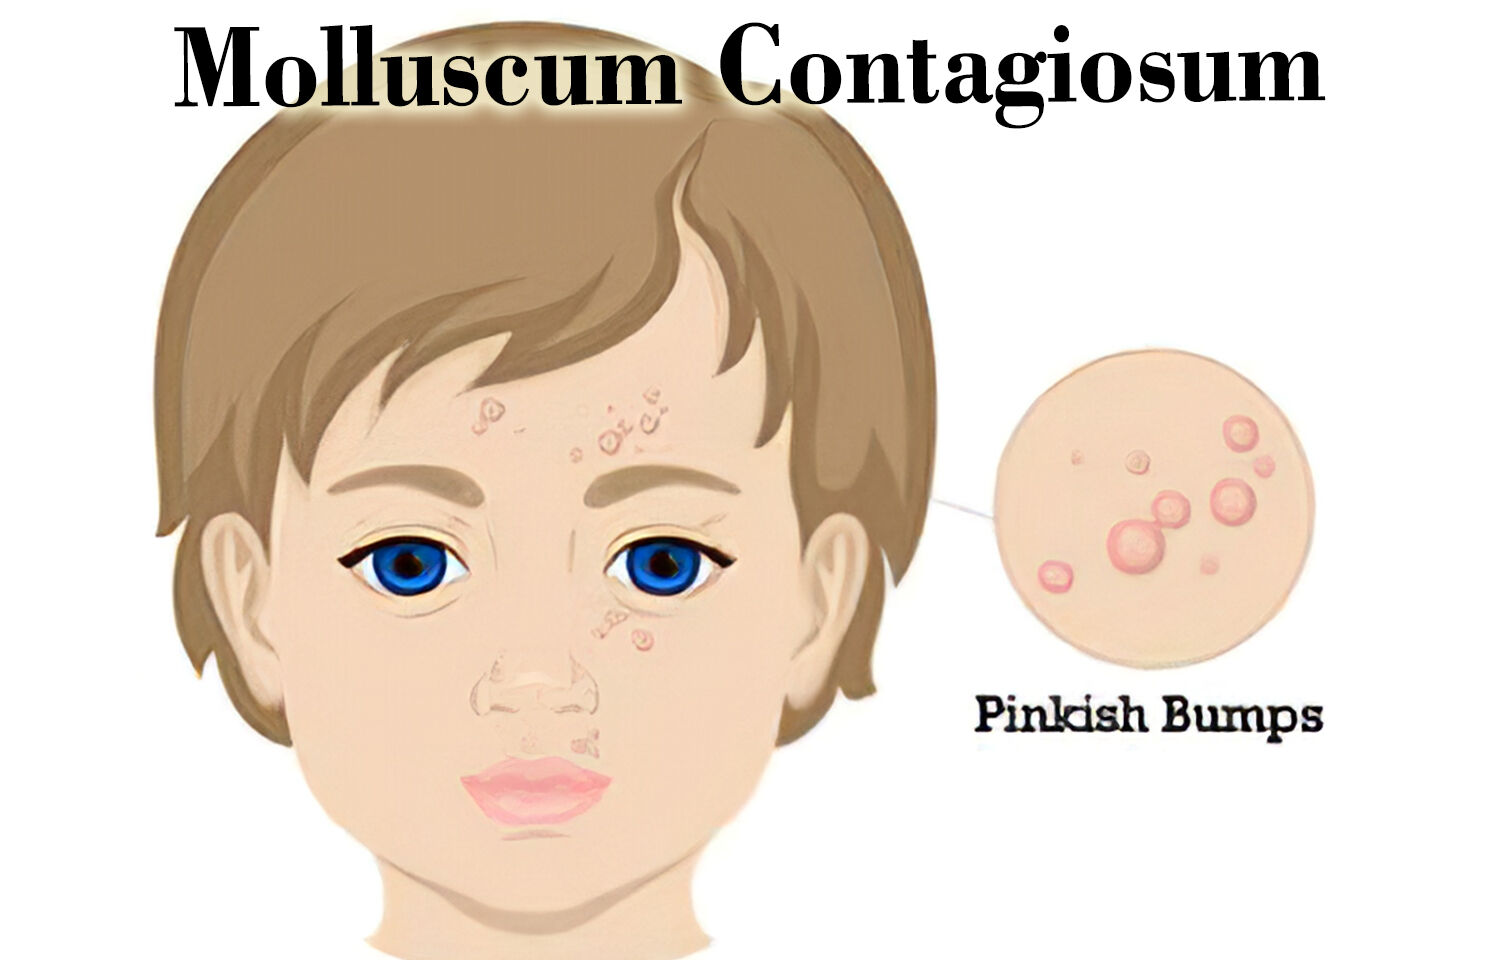 New treatment for Molluscum Contagiosum receives FDA approval